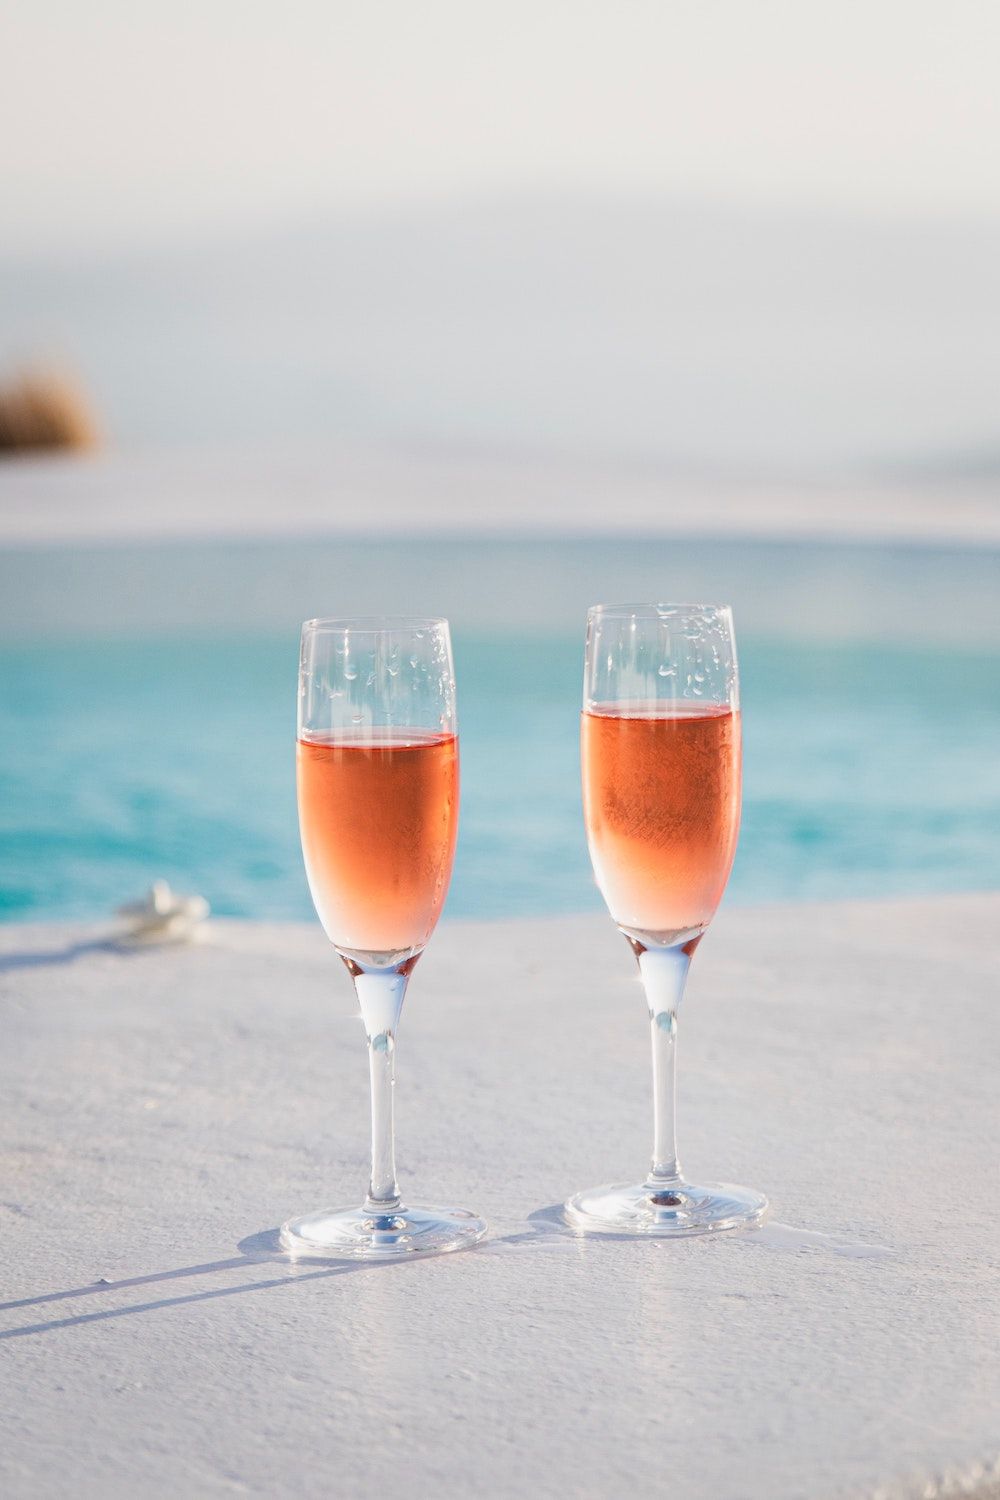 Chanel has released its first rosé wine, the Domaine de l'Ile